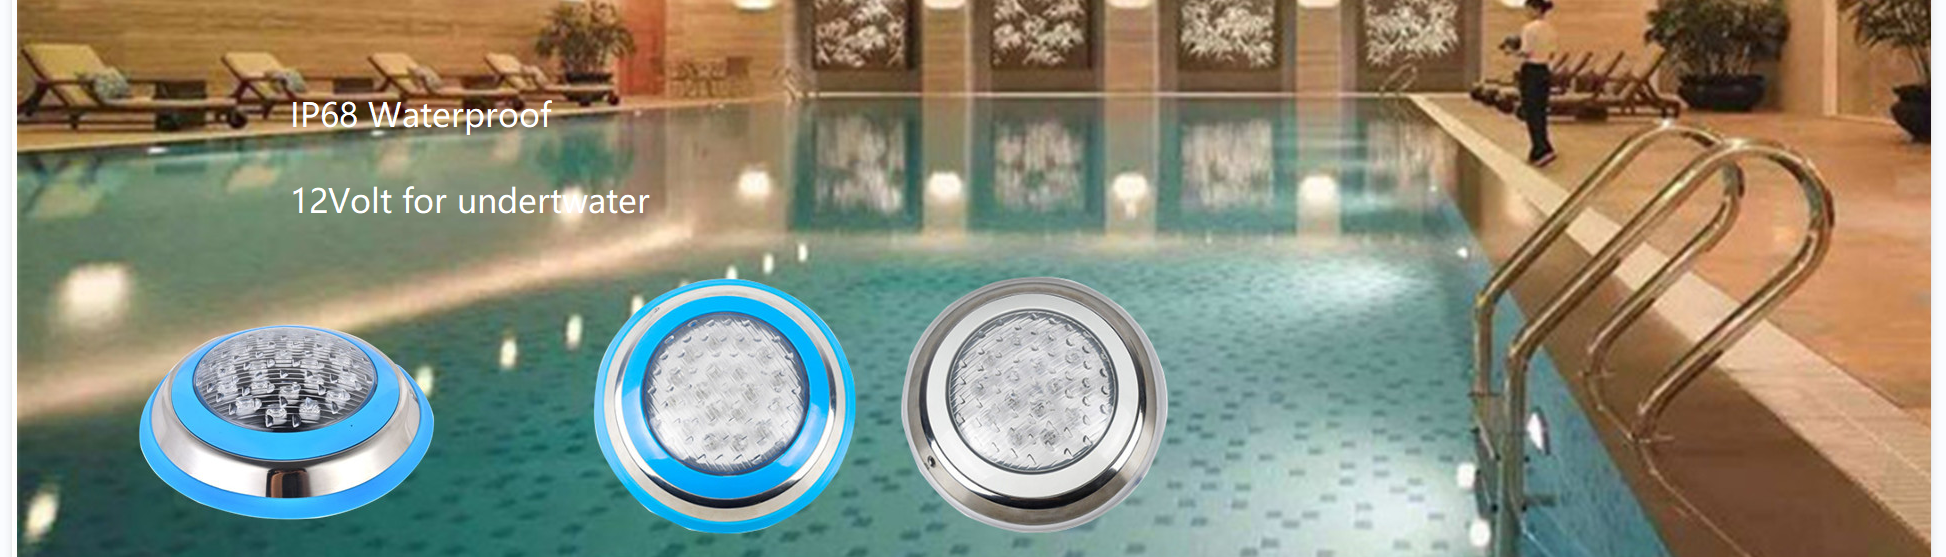 Led swimming pool light 